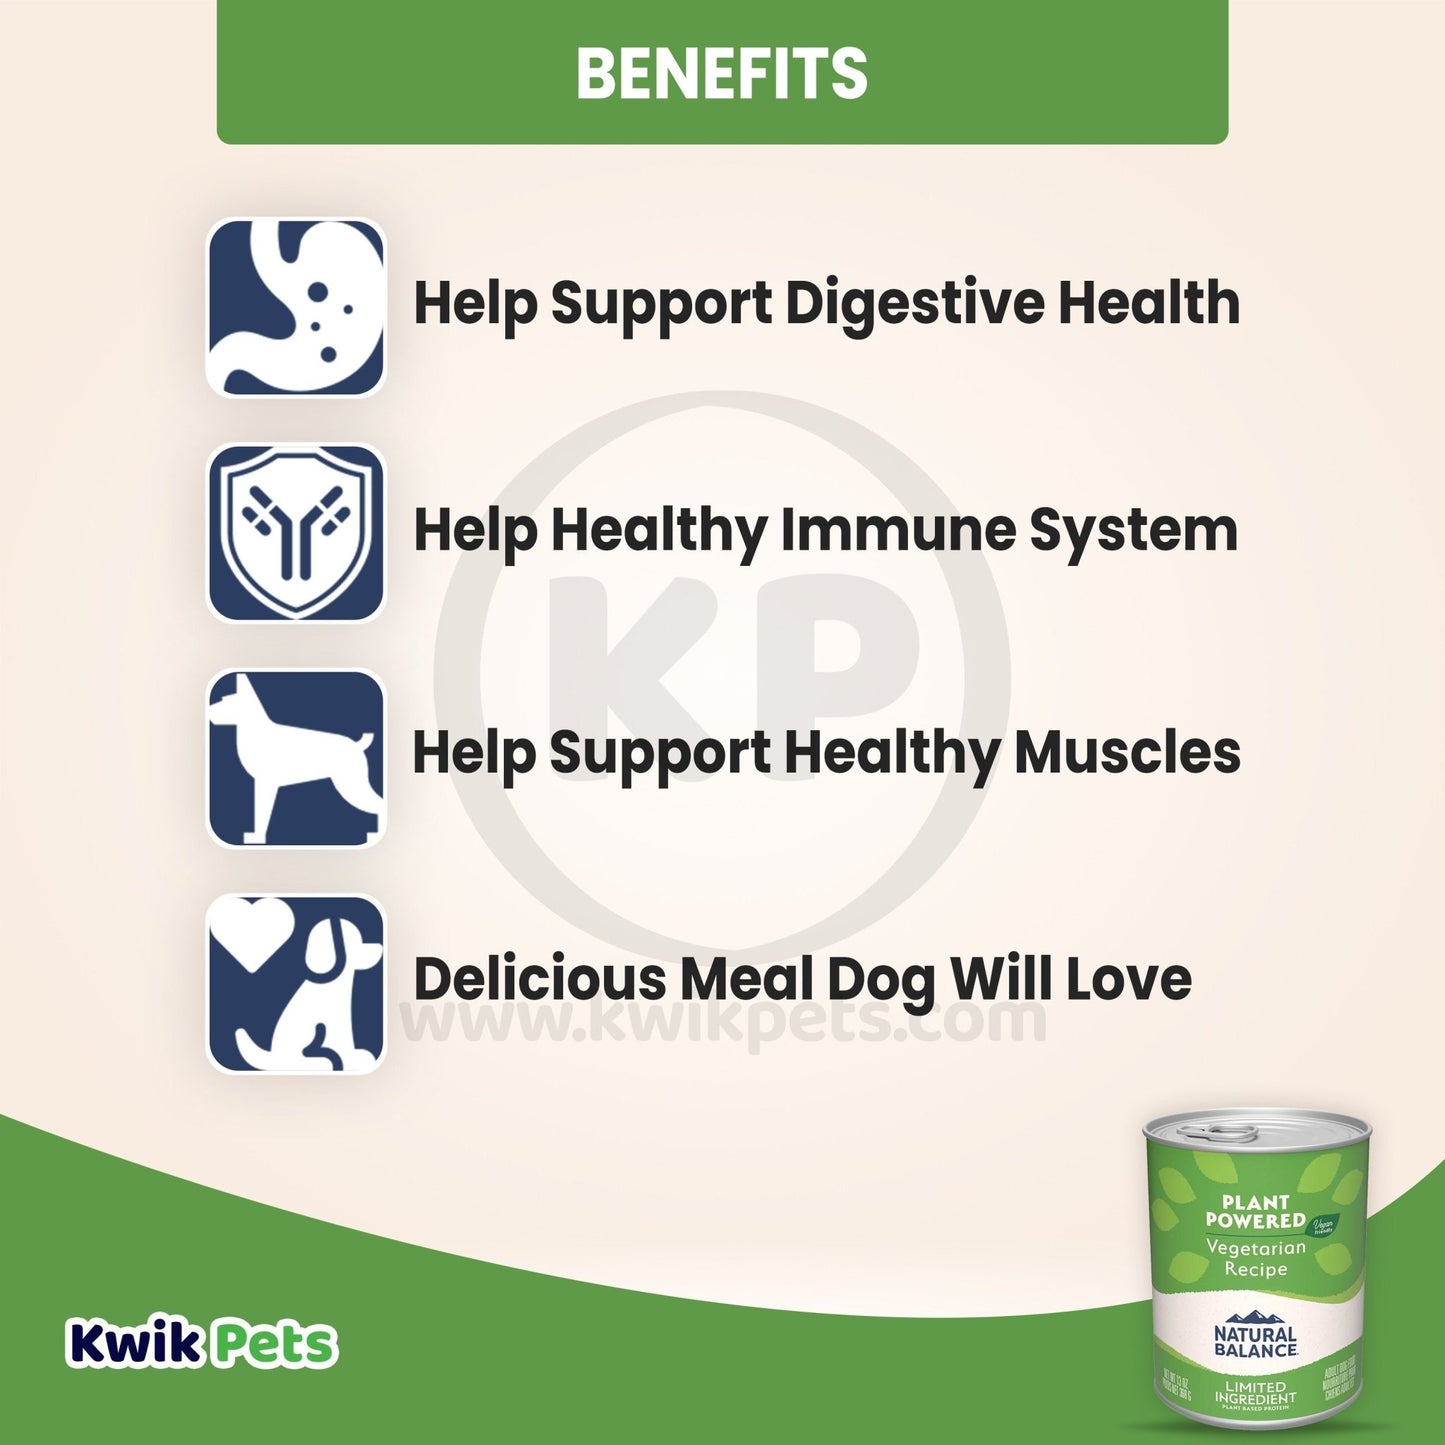 Natural Balance Pet Foods Vegetarian Formula Canned Dog Food 13 oz - Kwik Pets